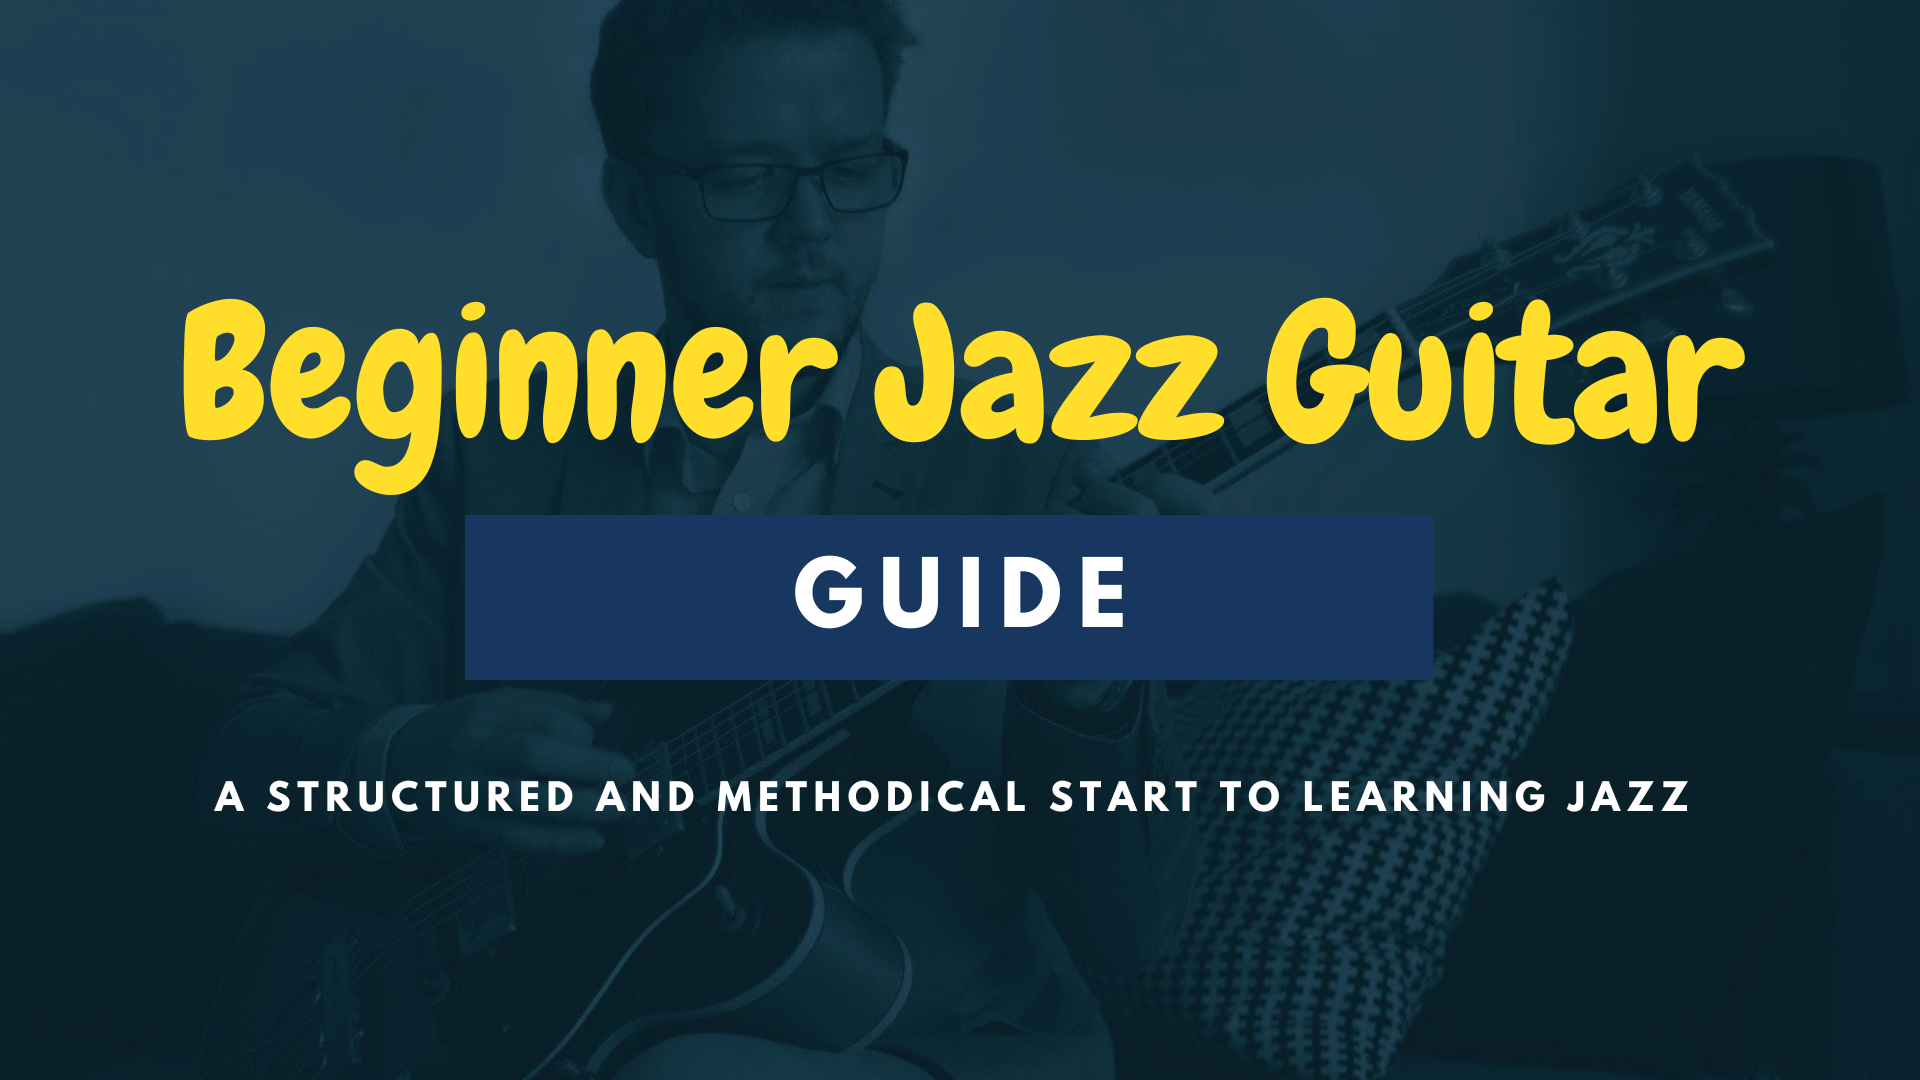 Beginner Jazz Guitar Guide [Free]